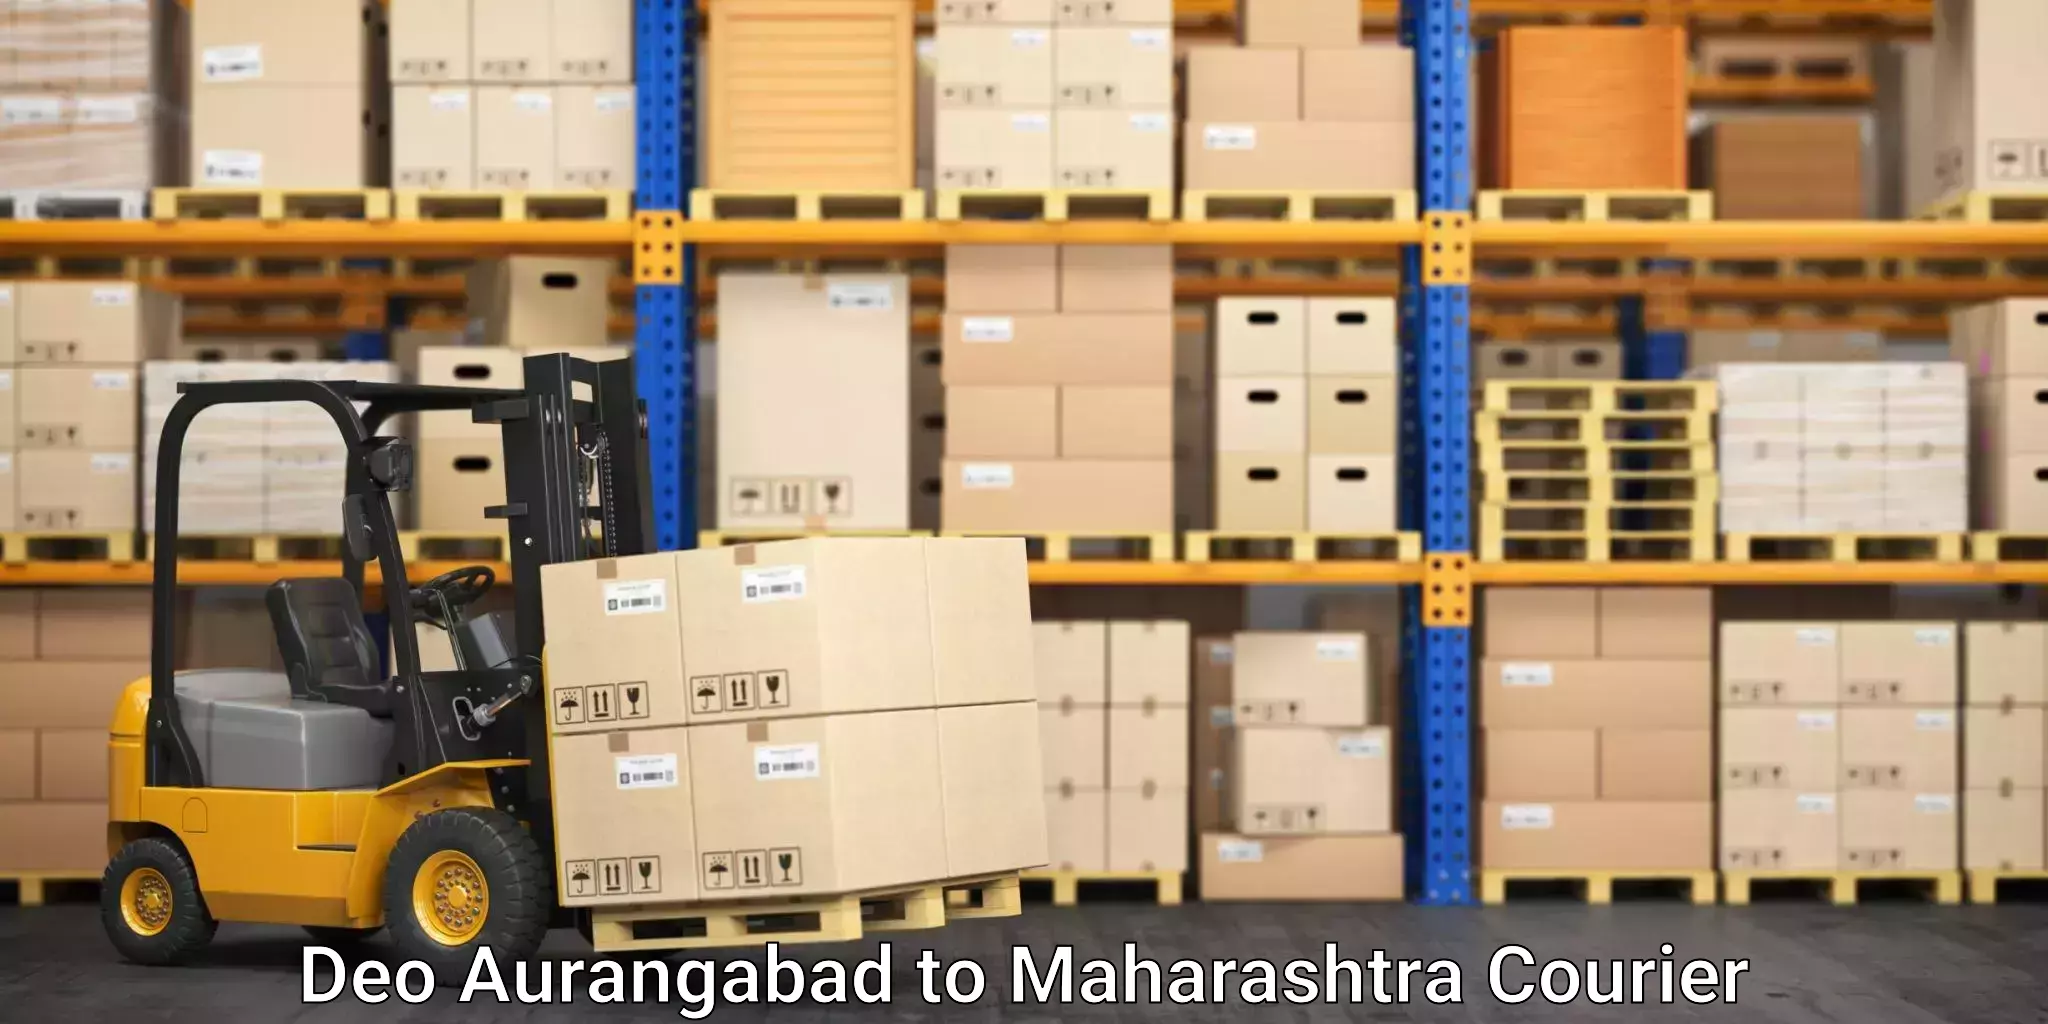 Household goods movers Deo Aurangabad to Maharashtra